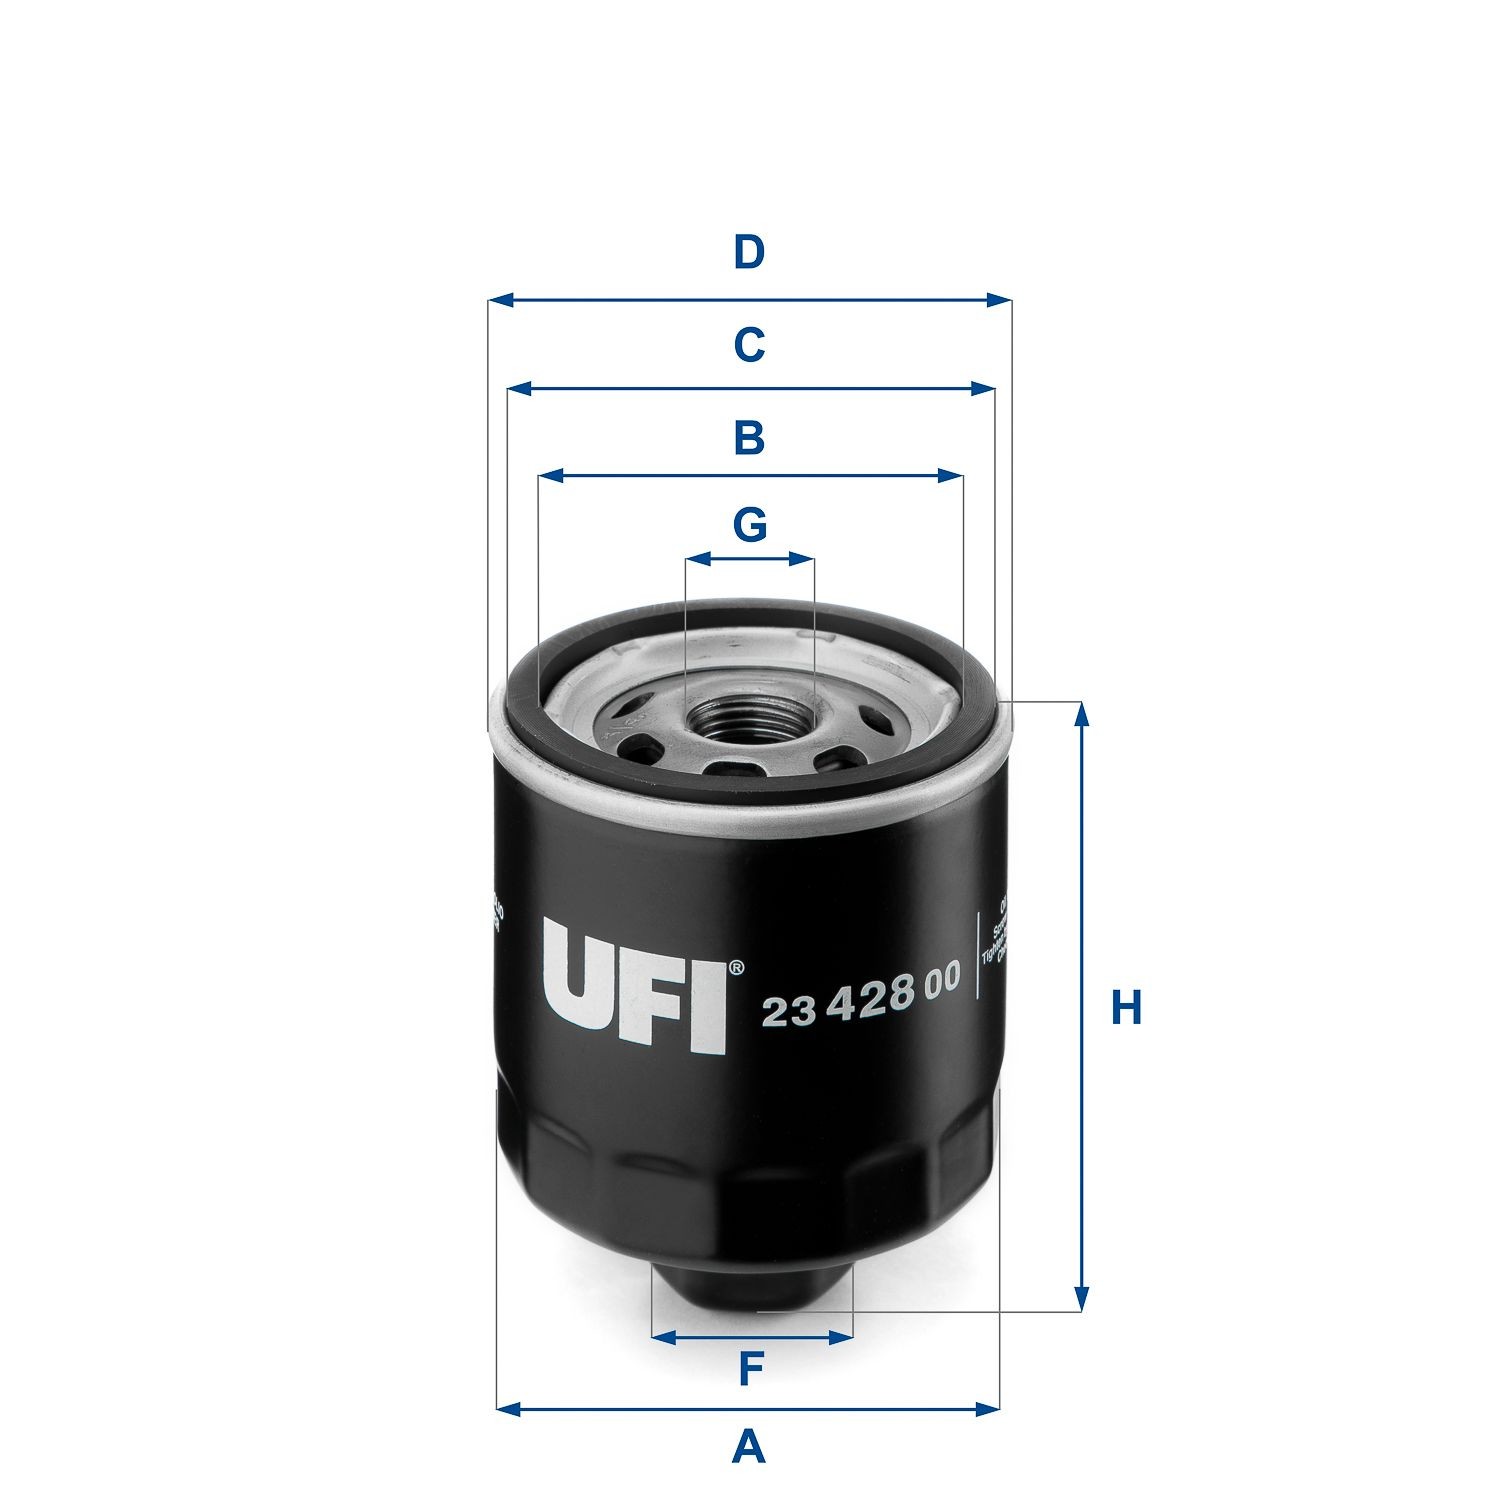 UFI 23.428.00 Motorölfilter 3/4-16 UNF, mit einem Rücklaufsperrventil, Anschraubfilter